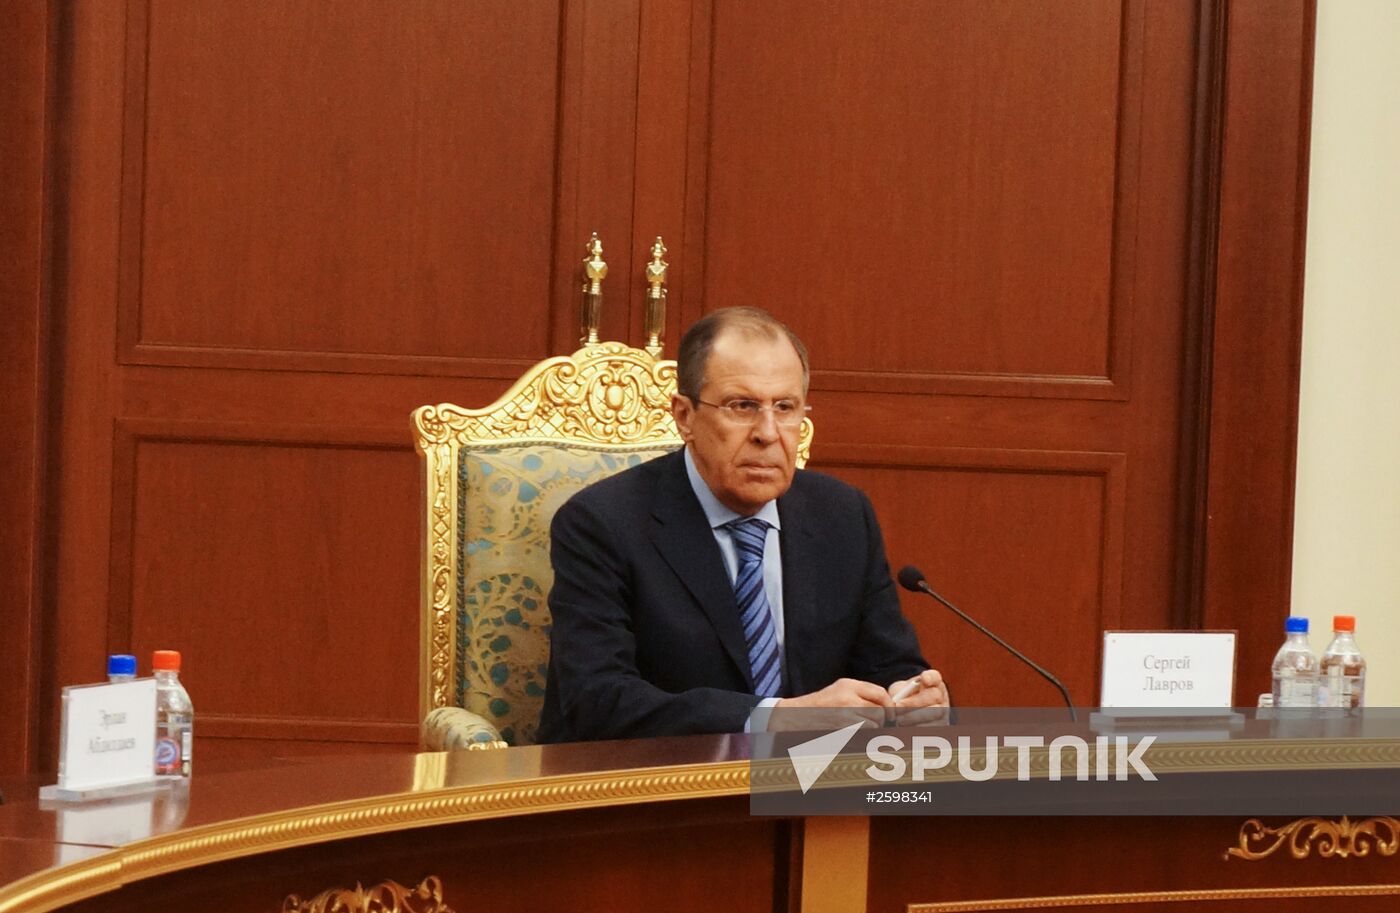 Russian Foreign Minister Sergey Lavrov's working trip to Tajikistan